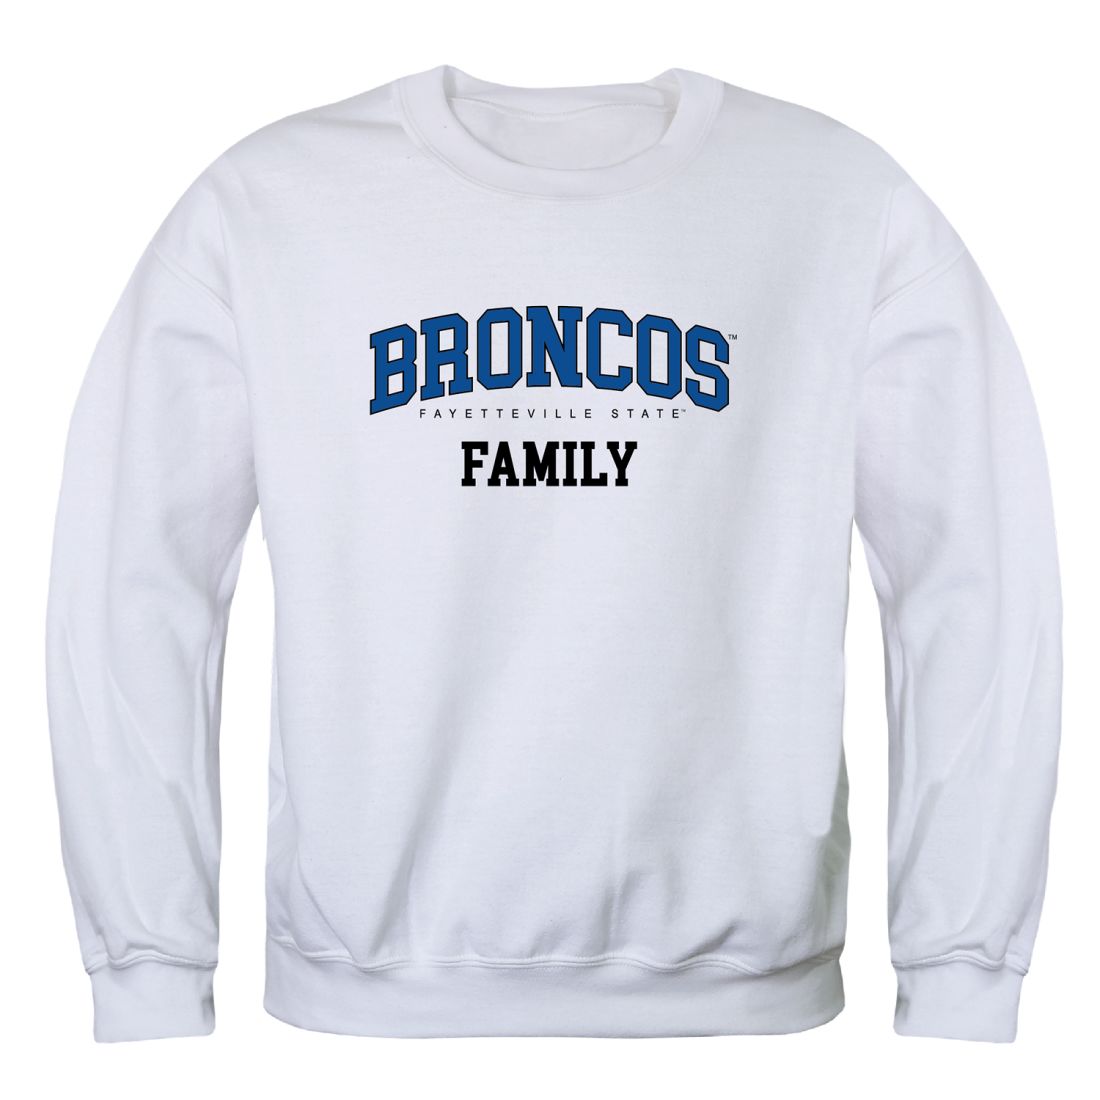 Fayetteville-State-University-Broncos-Family-Fleece-Crewneck-Pullover-Sweatshirt